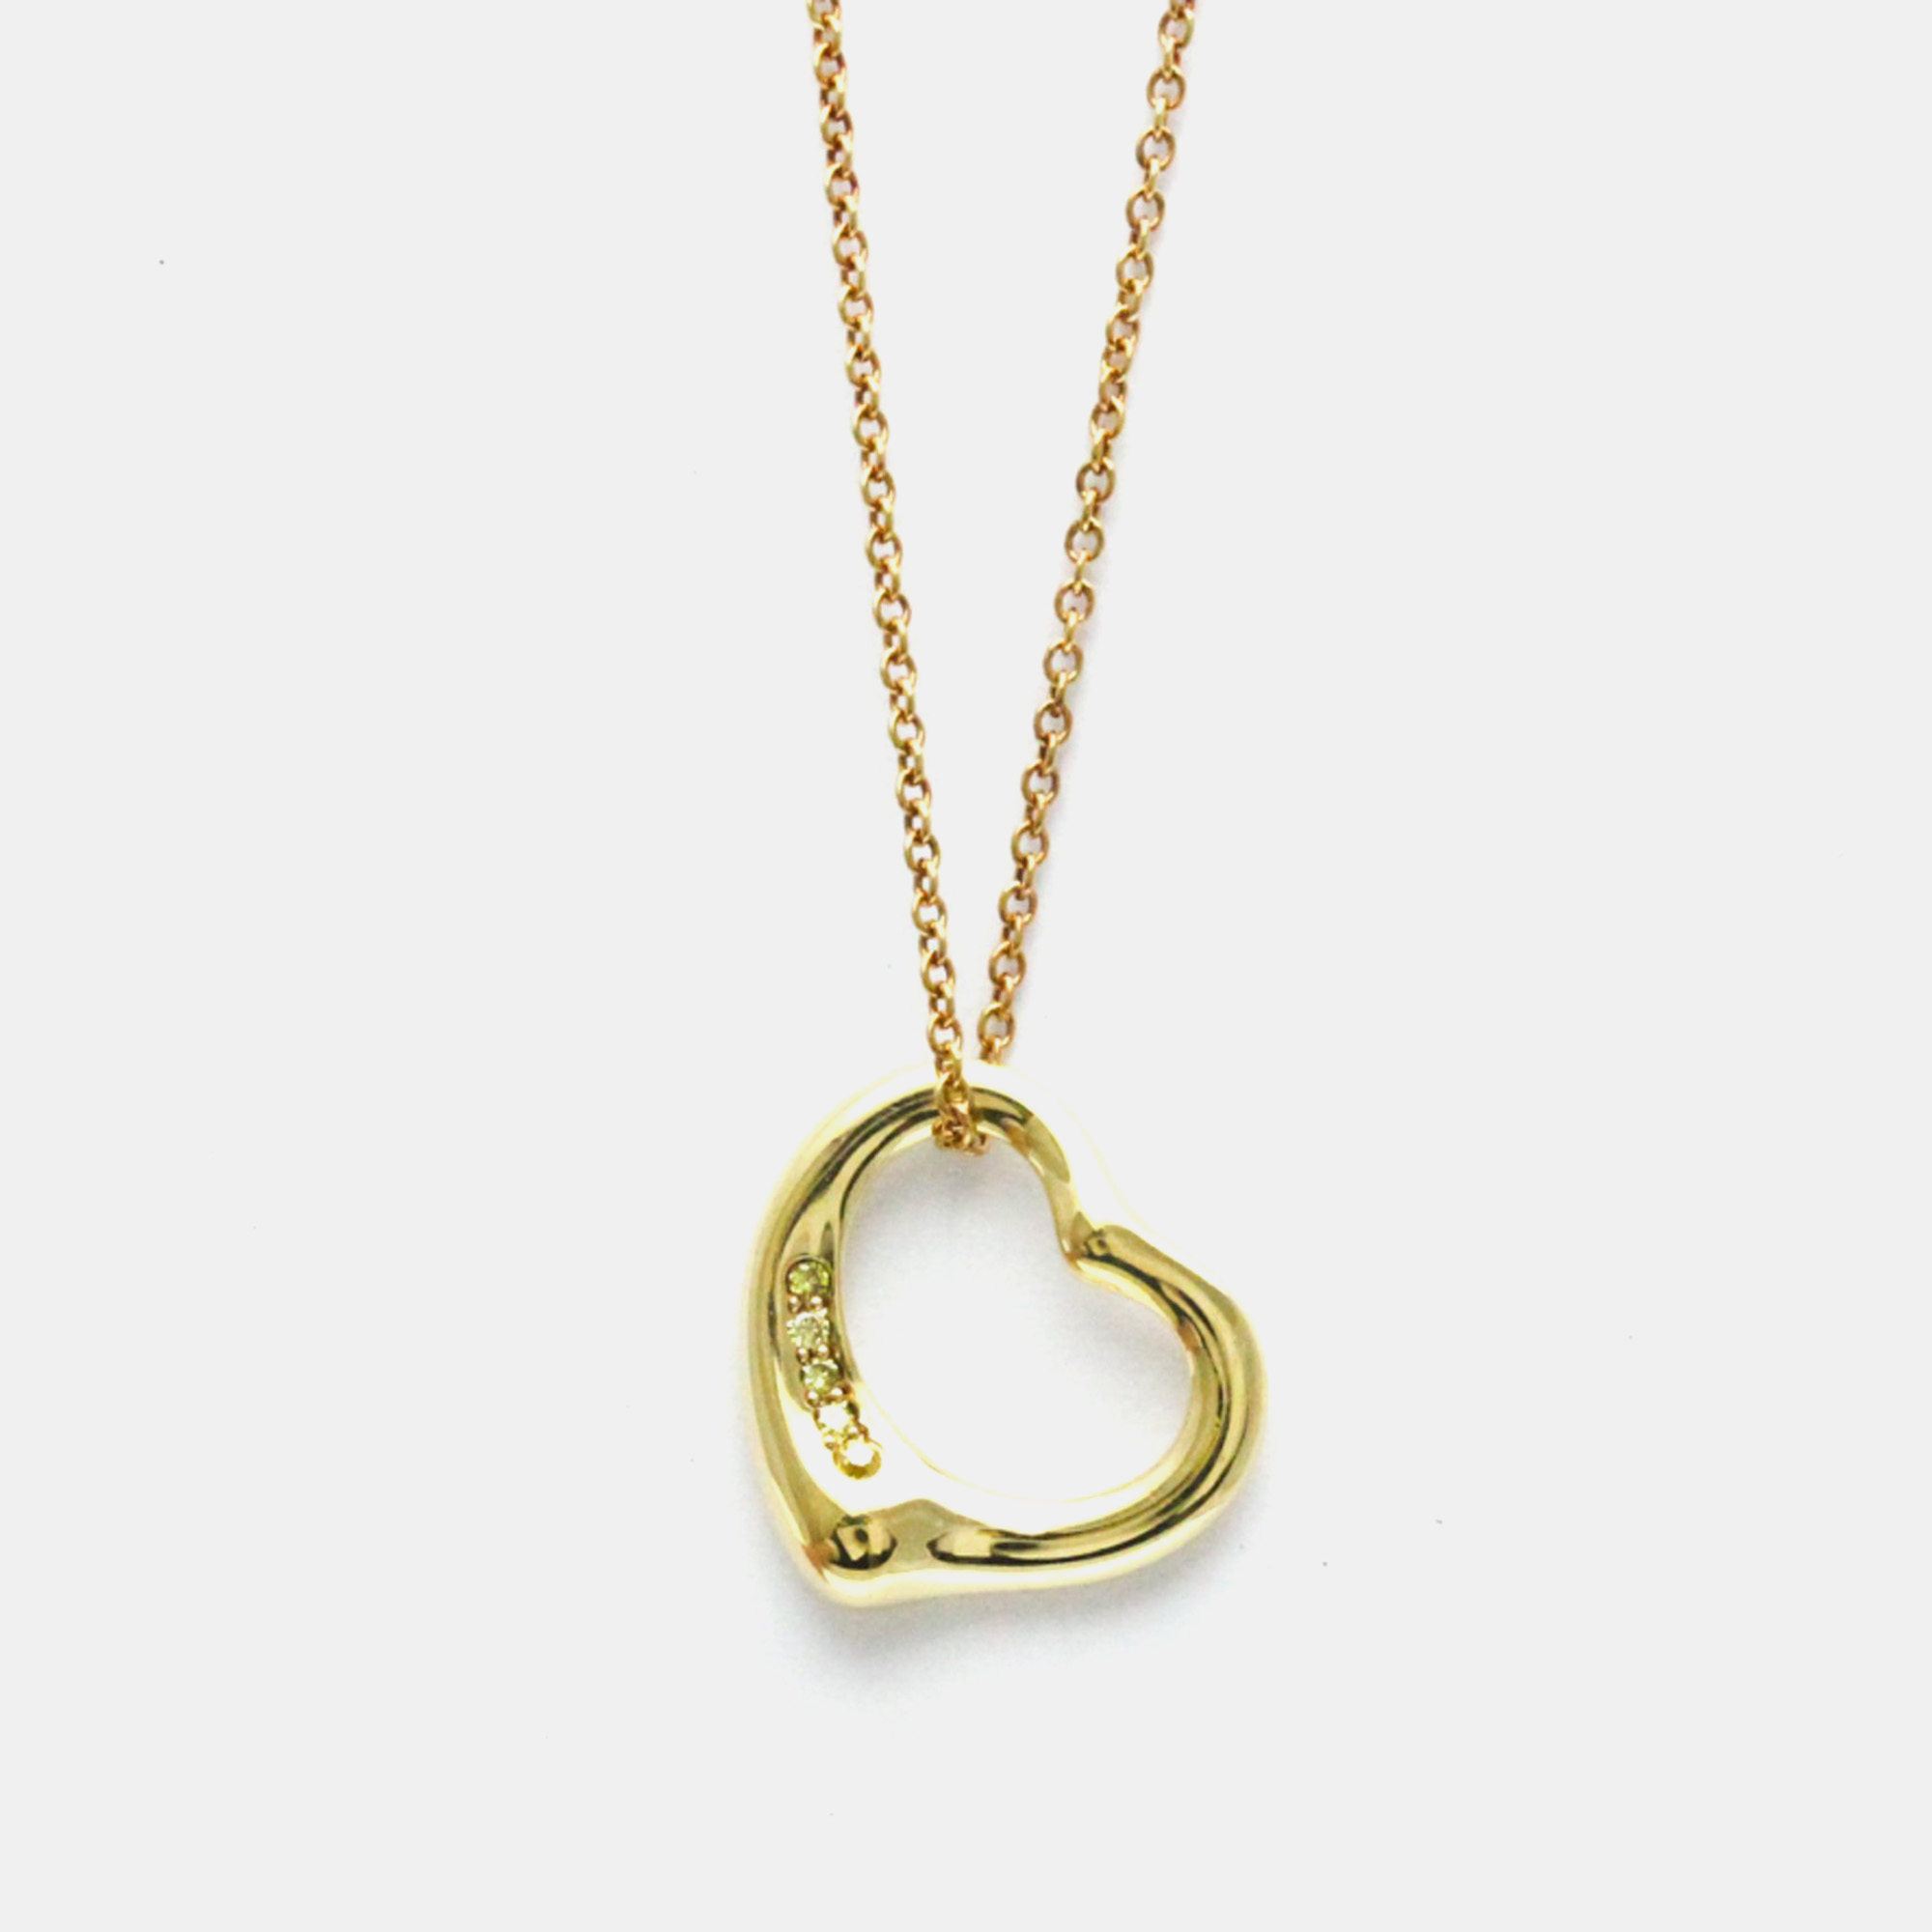 Tiffany & co. 18k yellow gold and diamond elsa peretti open heart pendant necklace